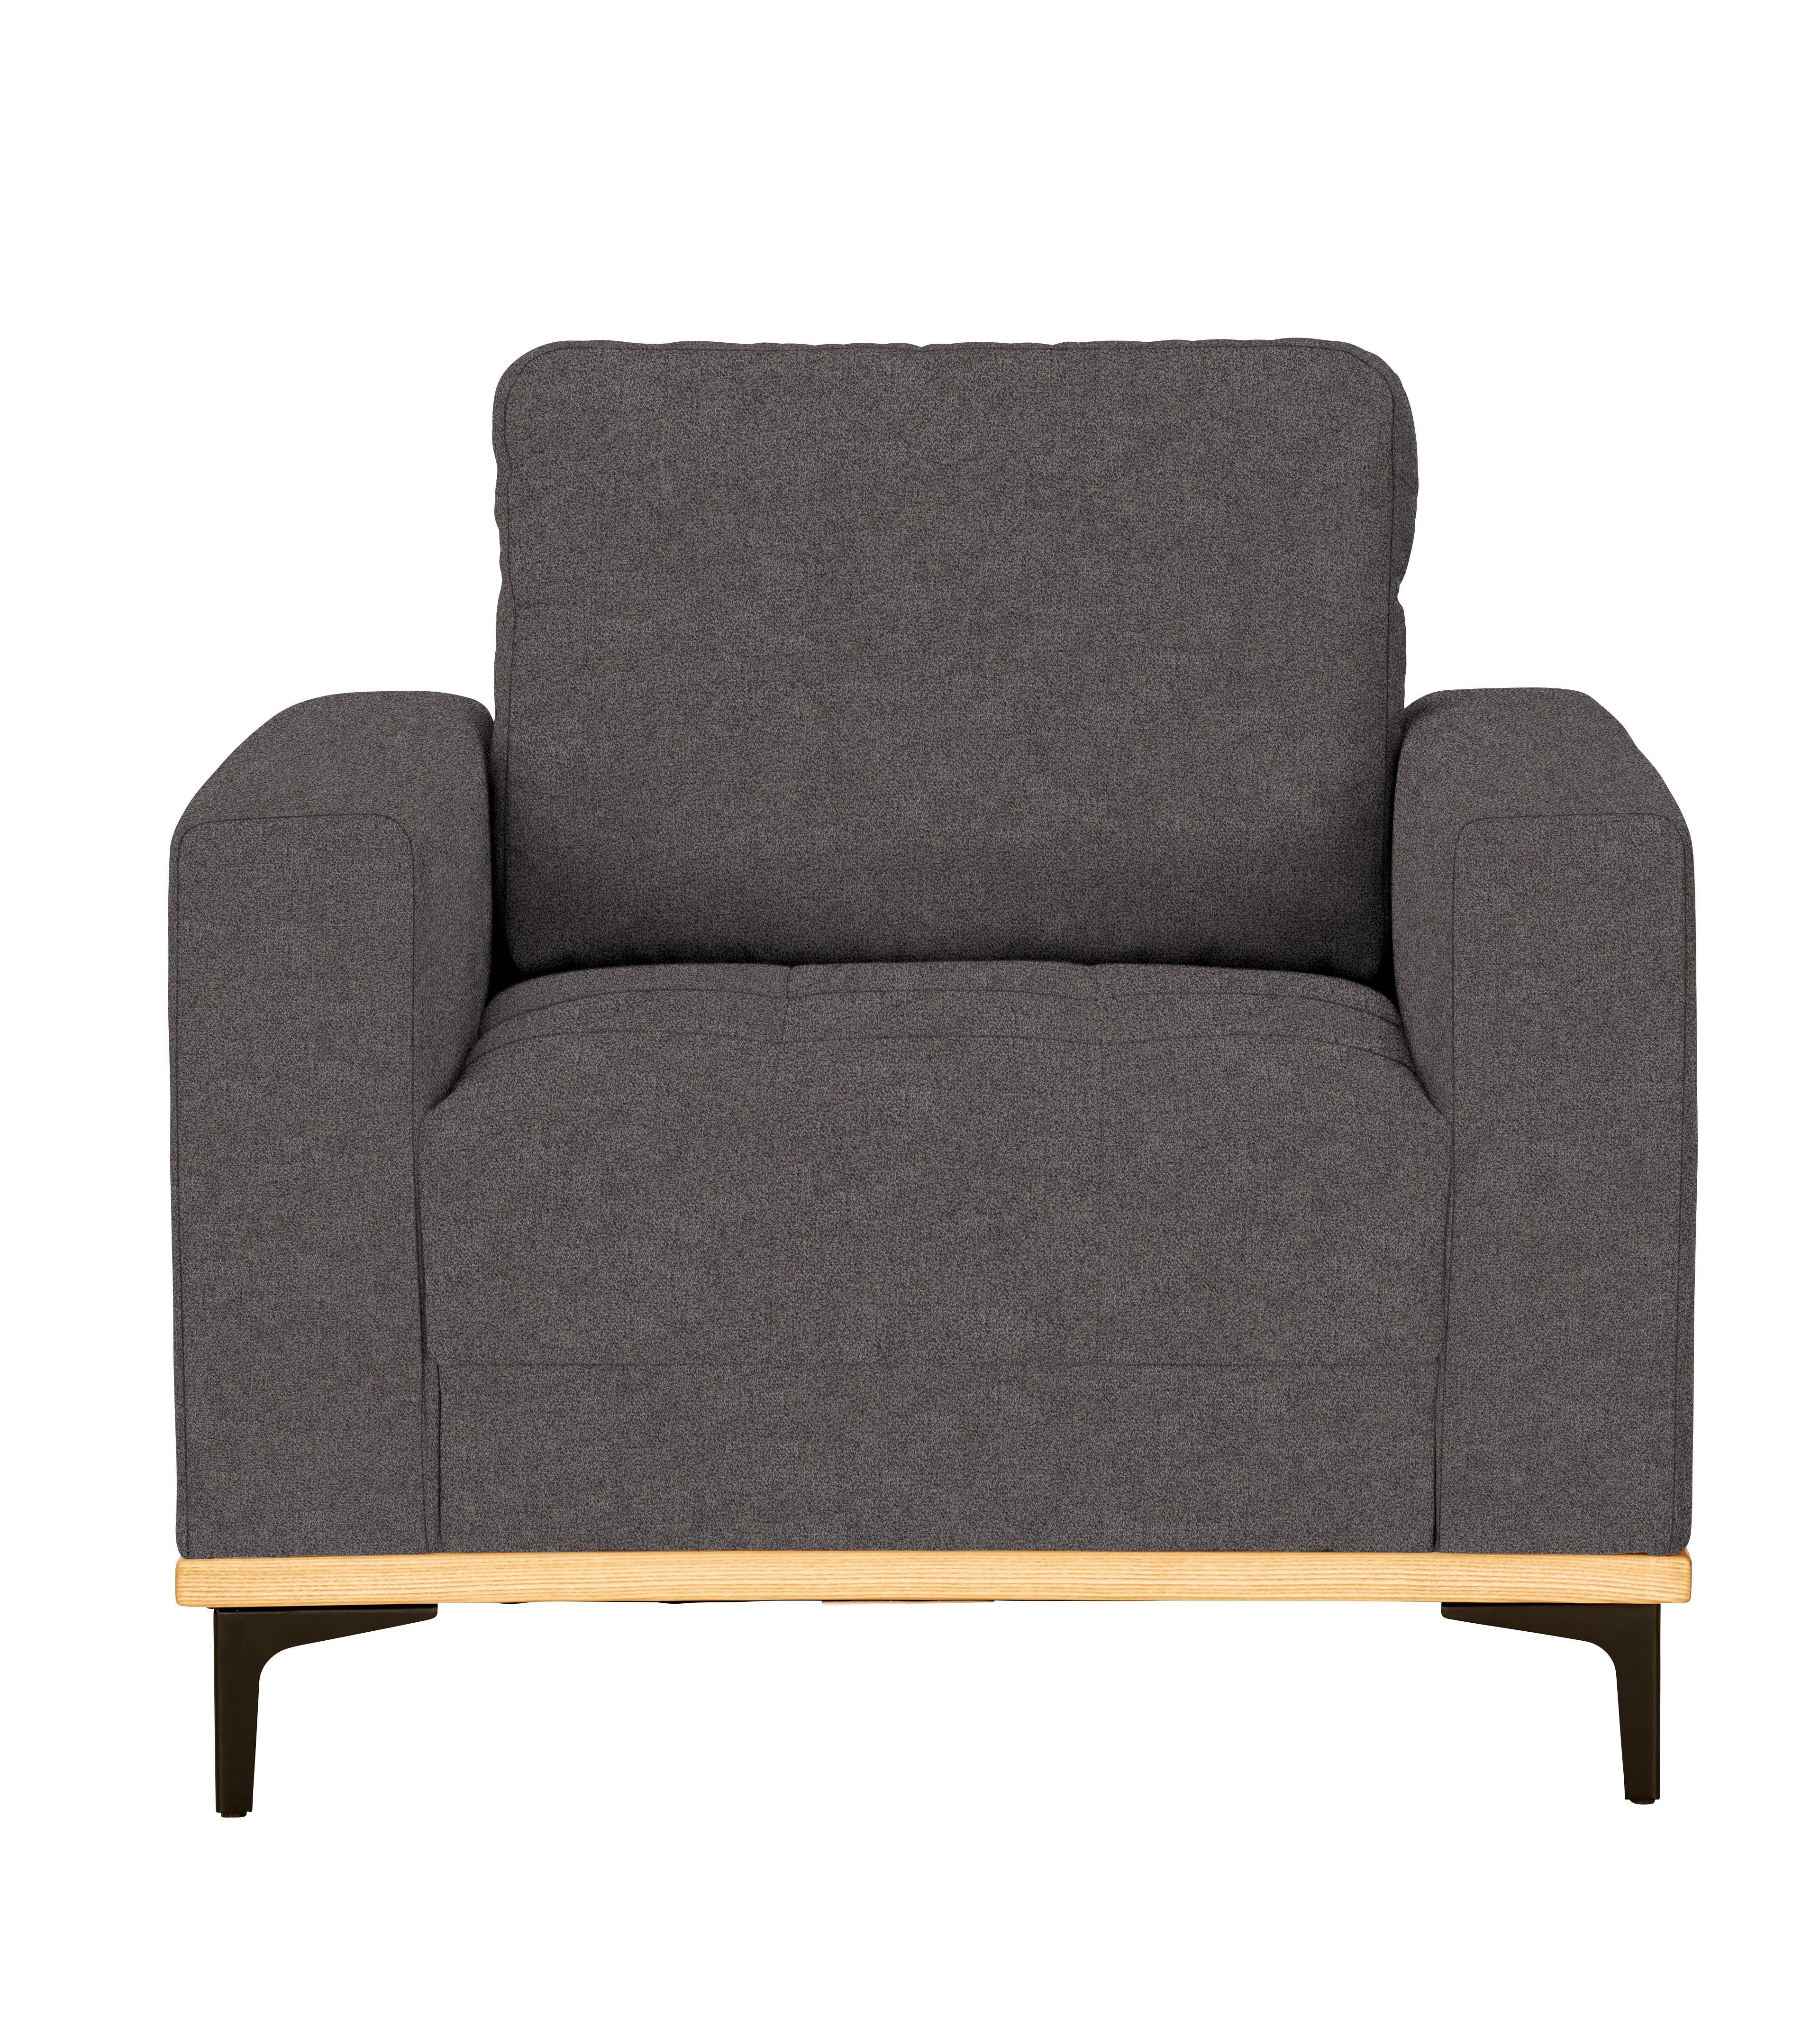 Fotelja Casper - smeđa/crna, Konventionell, tekstil/metal (96/87/92cm) - Zandiara